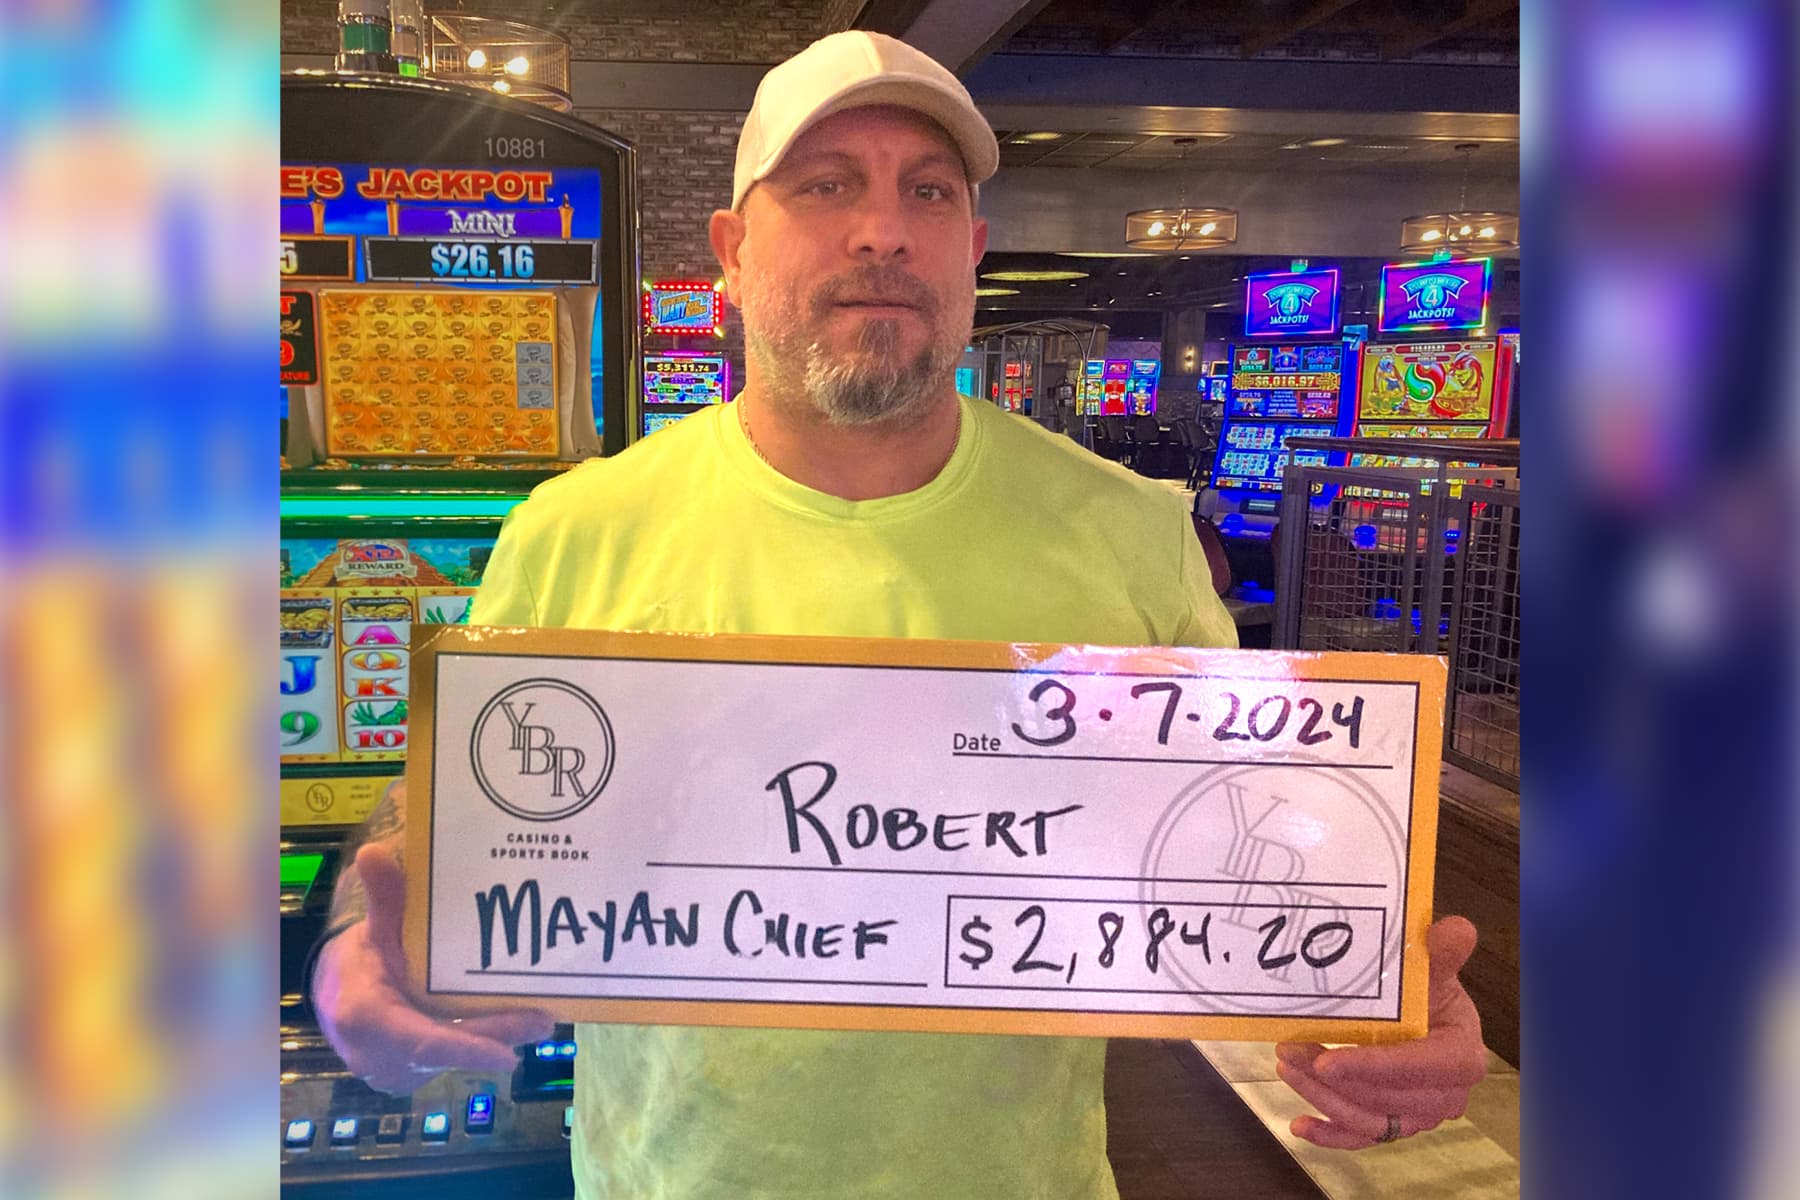 Robert won $2,884